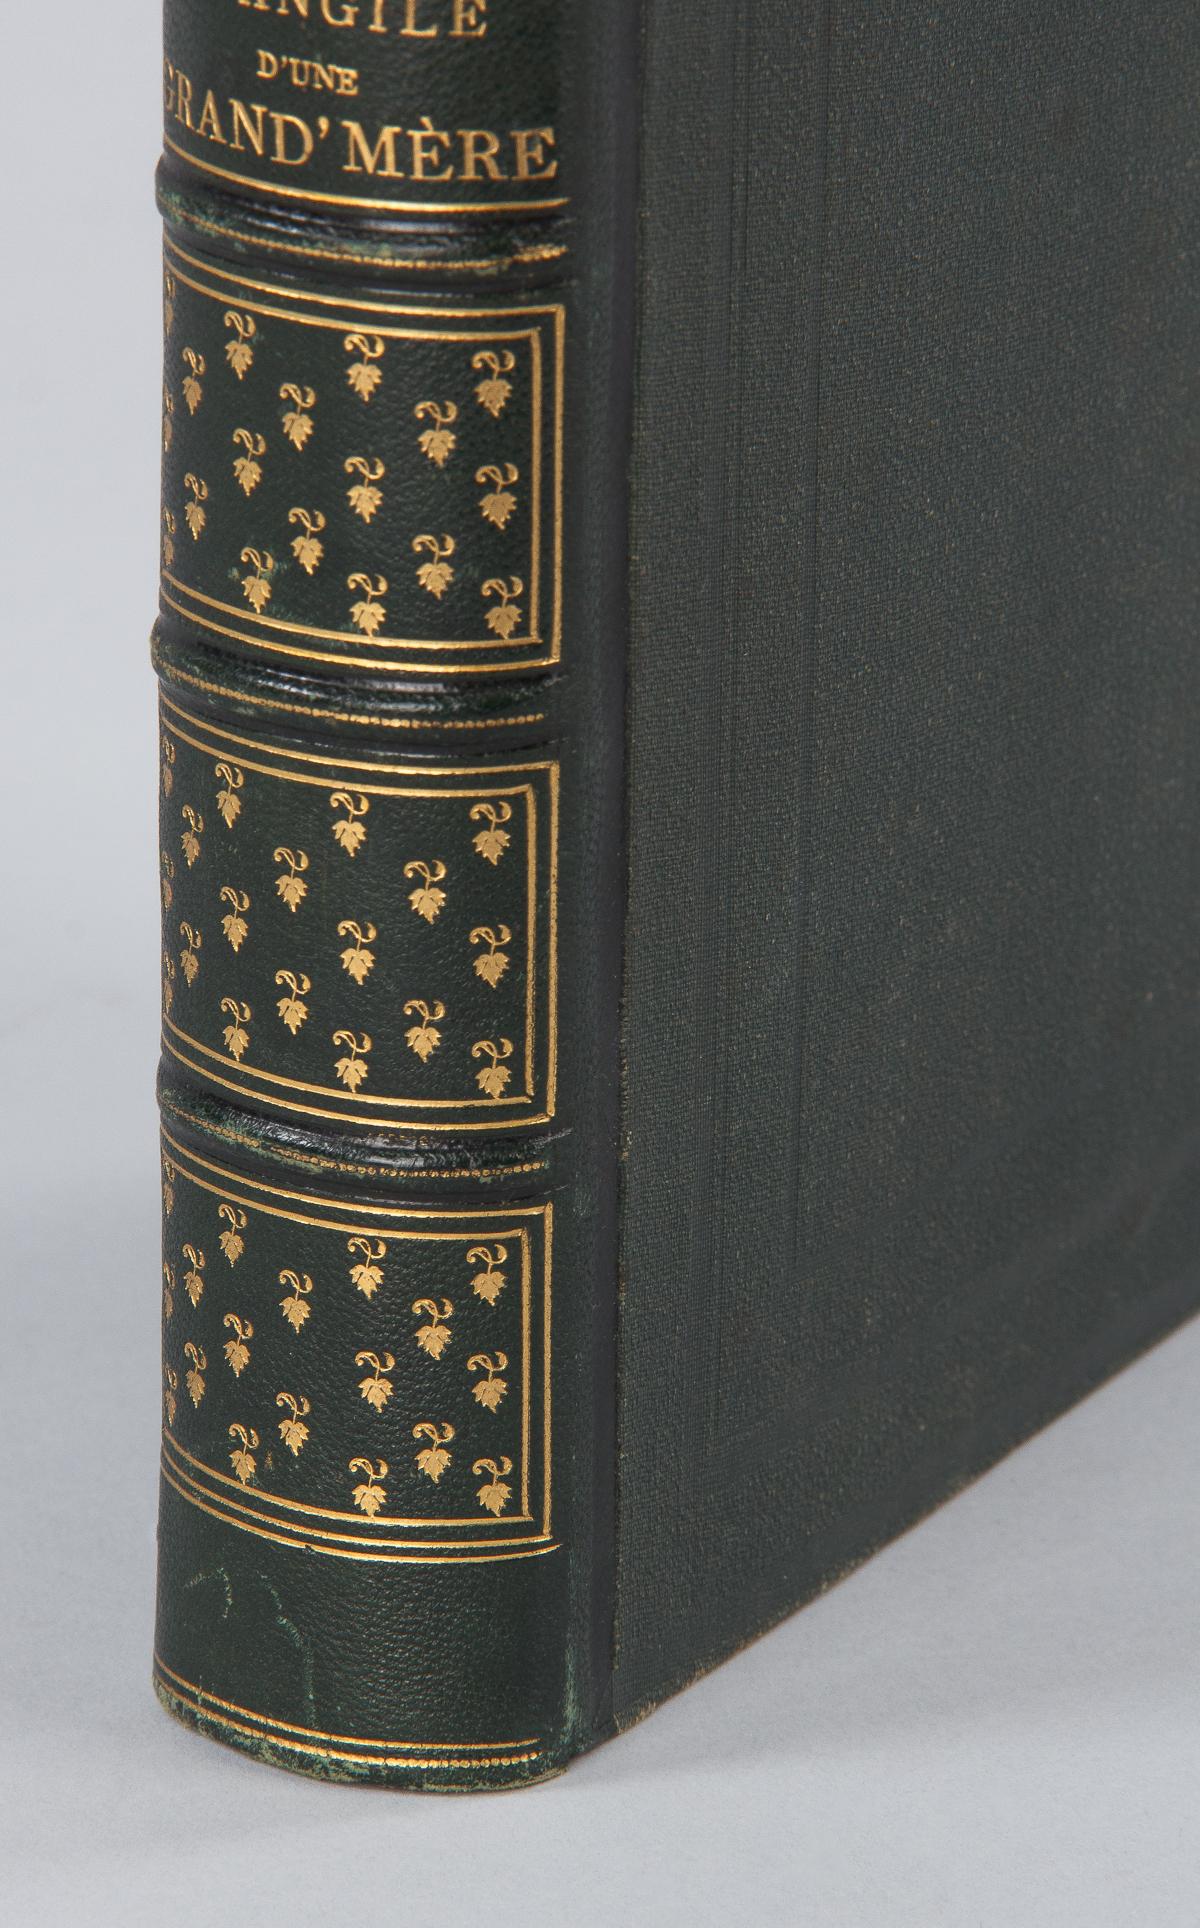 19th Century French Book Evangile d'une Grand Mere by Comtesse de Segur, 1866